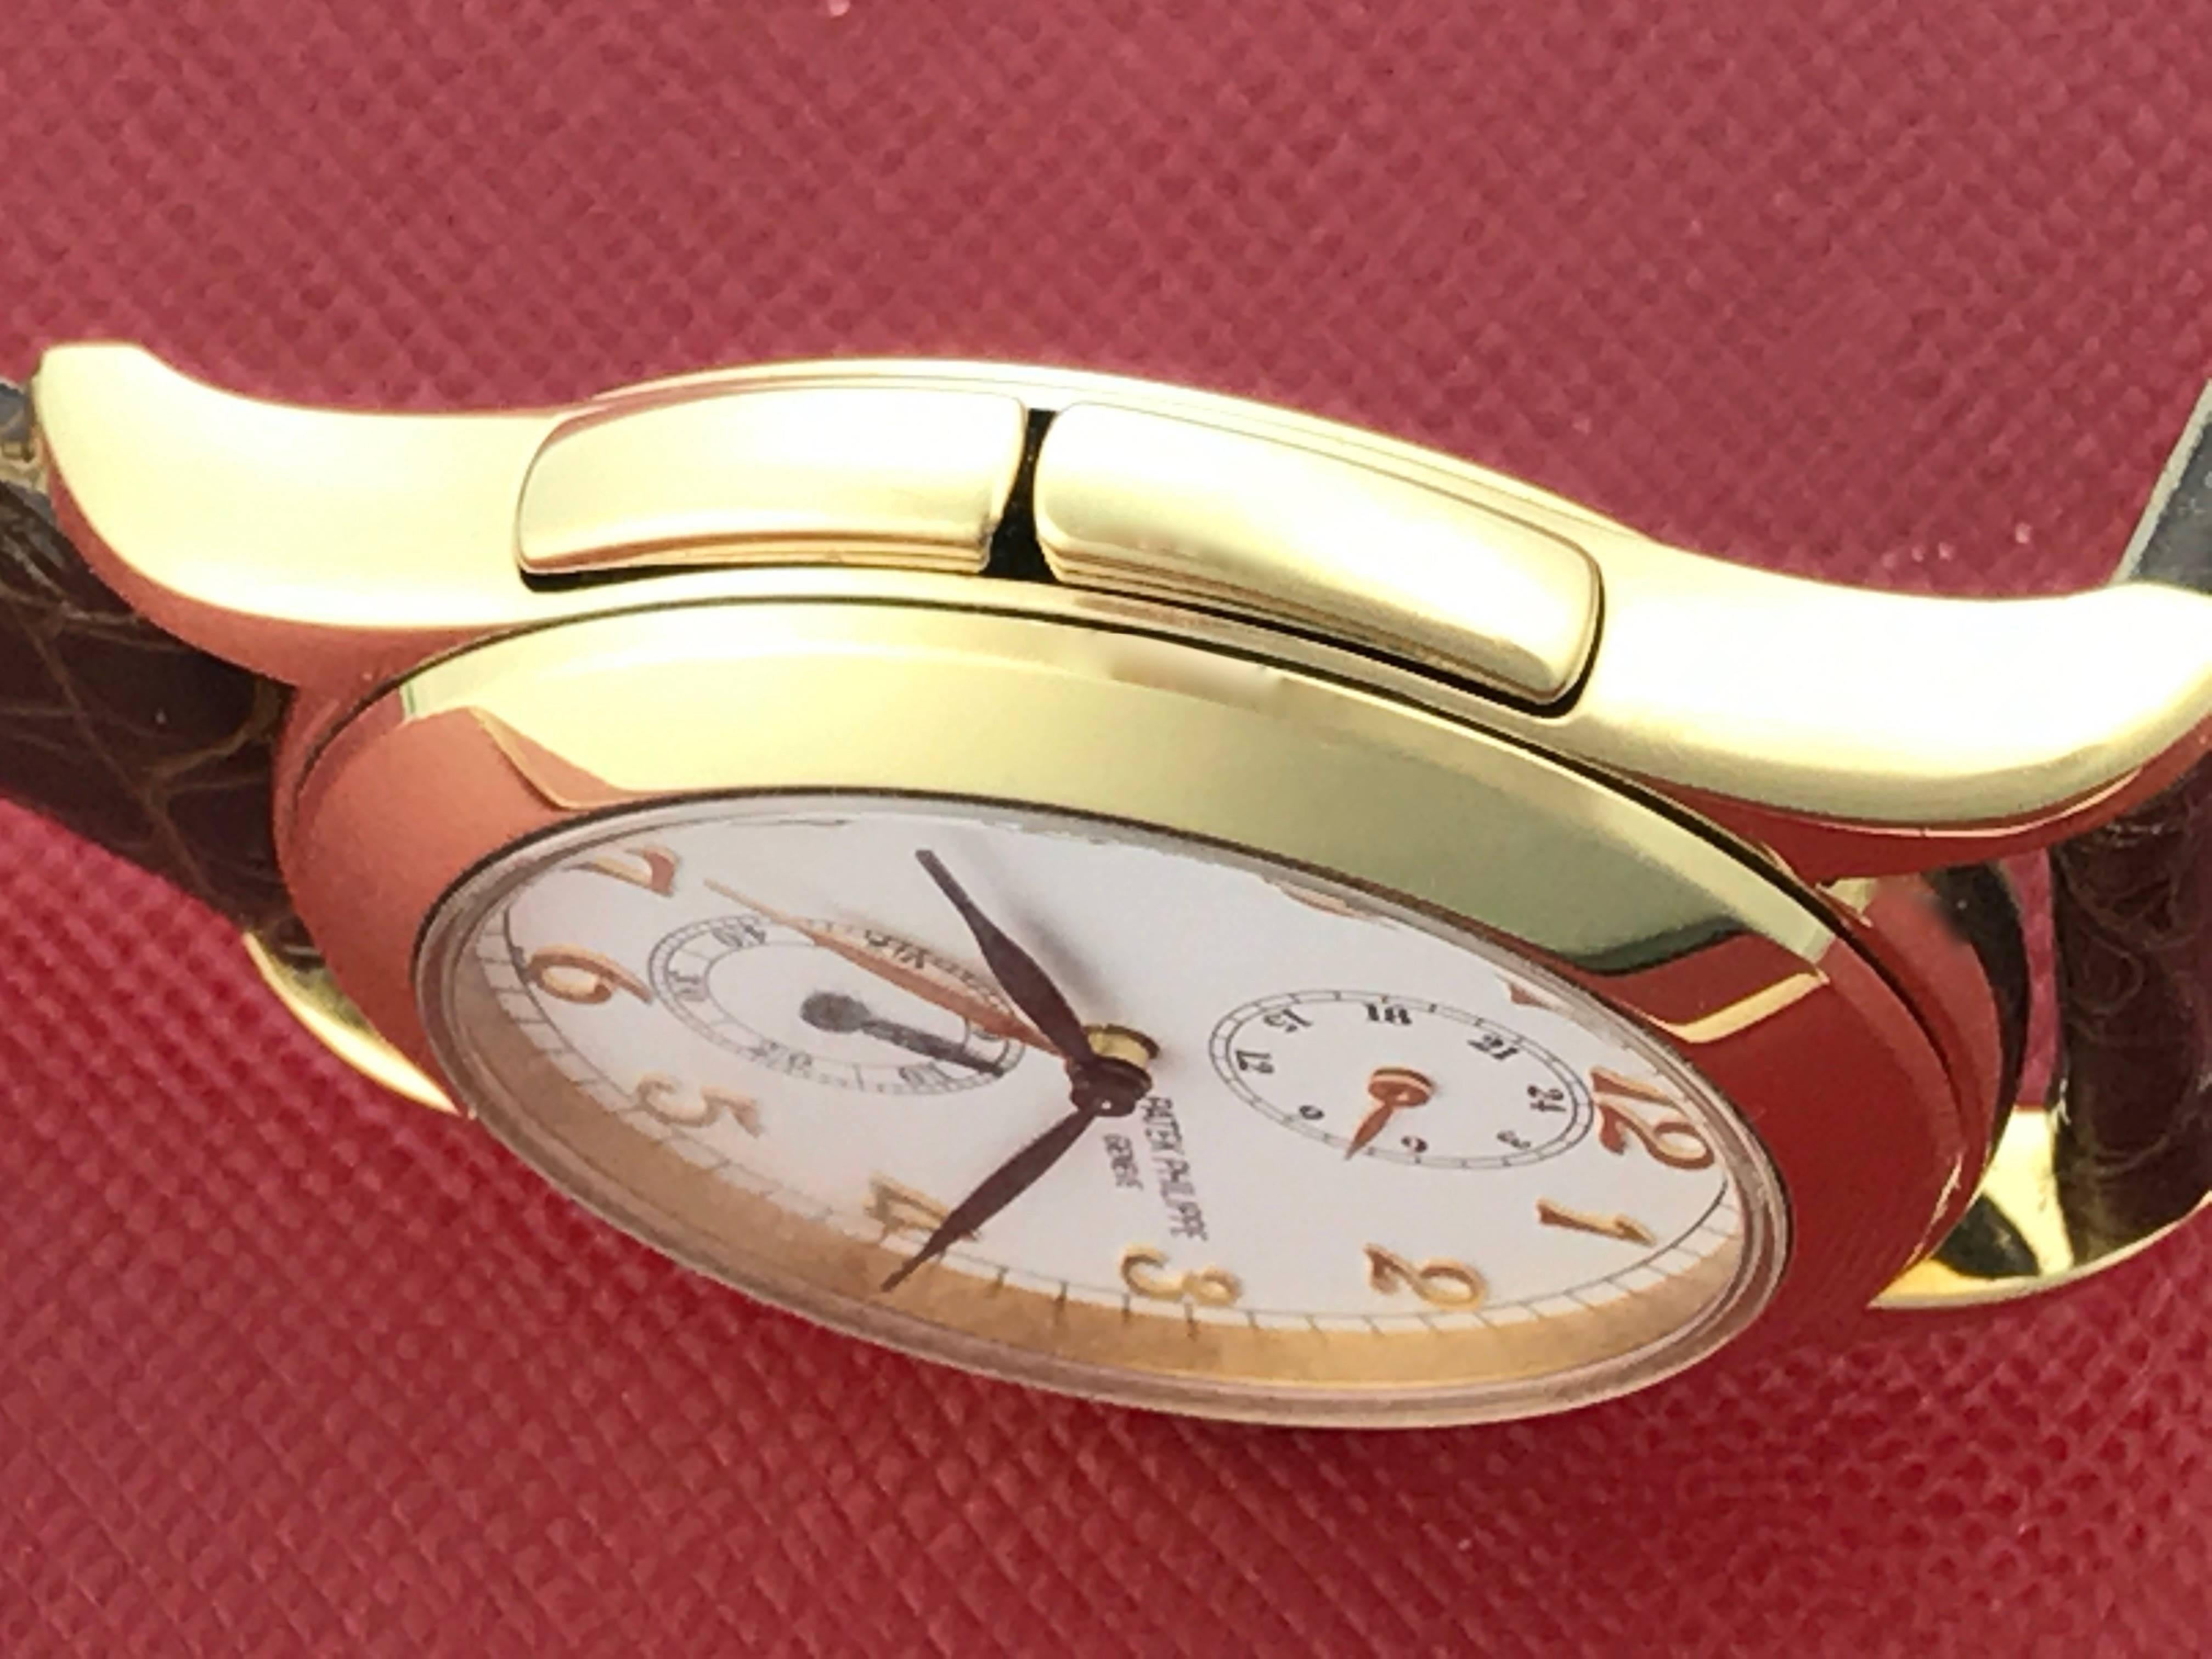 Patek Philippe Yellow Gold Travel Time Manual Wind Wristwatch Ref 5134J-001  2